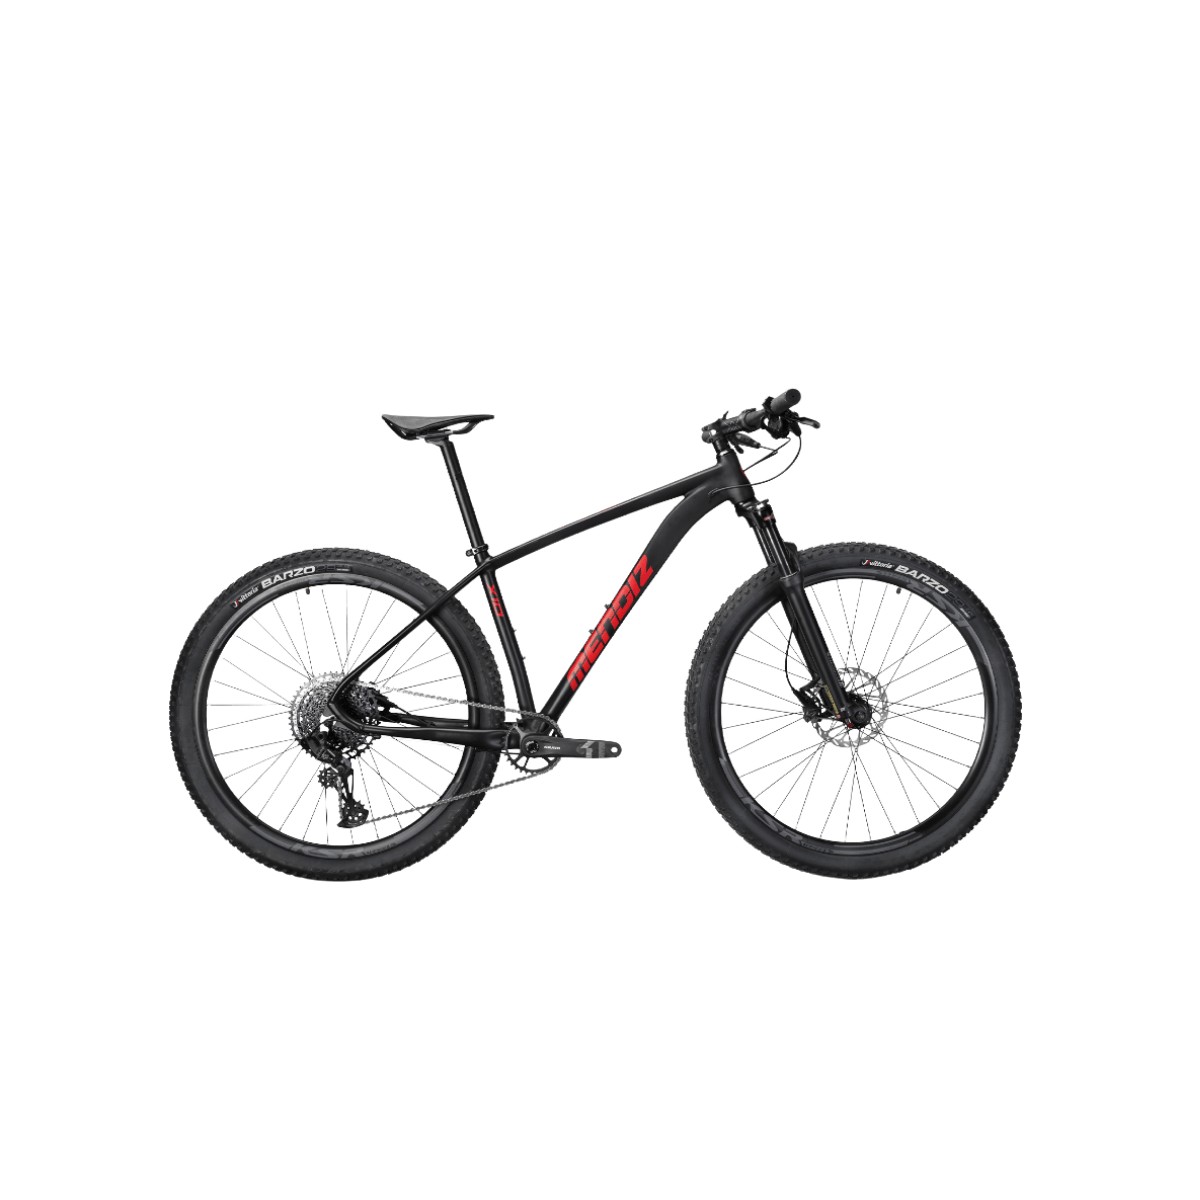 Mendiz MTB X10.05 Bike Red Black, Size 17